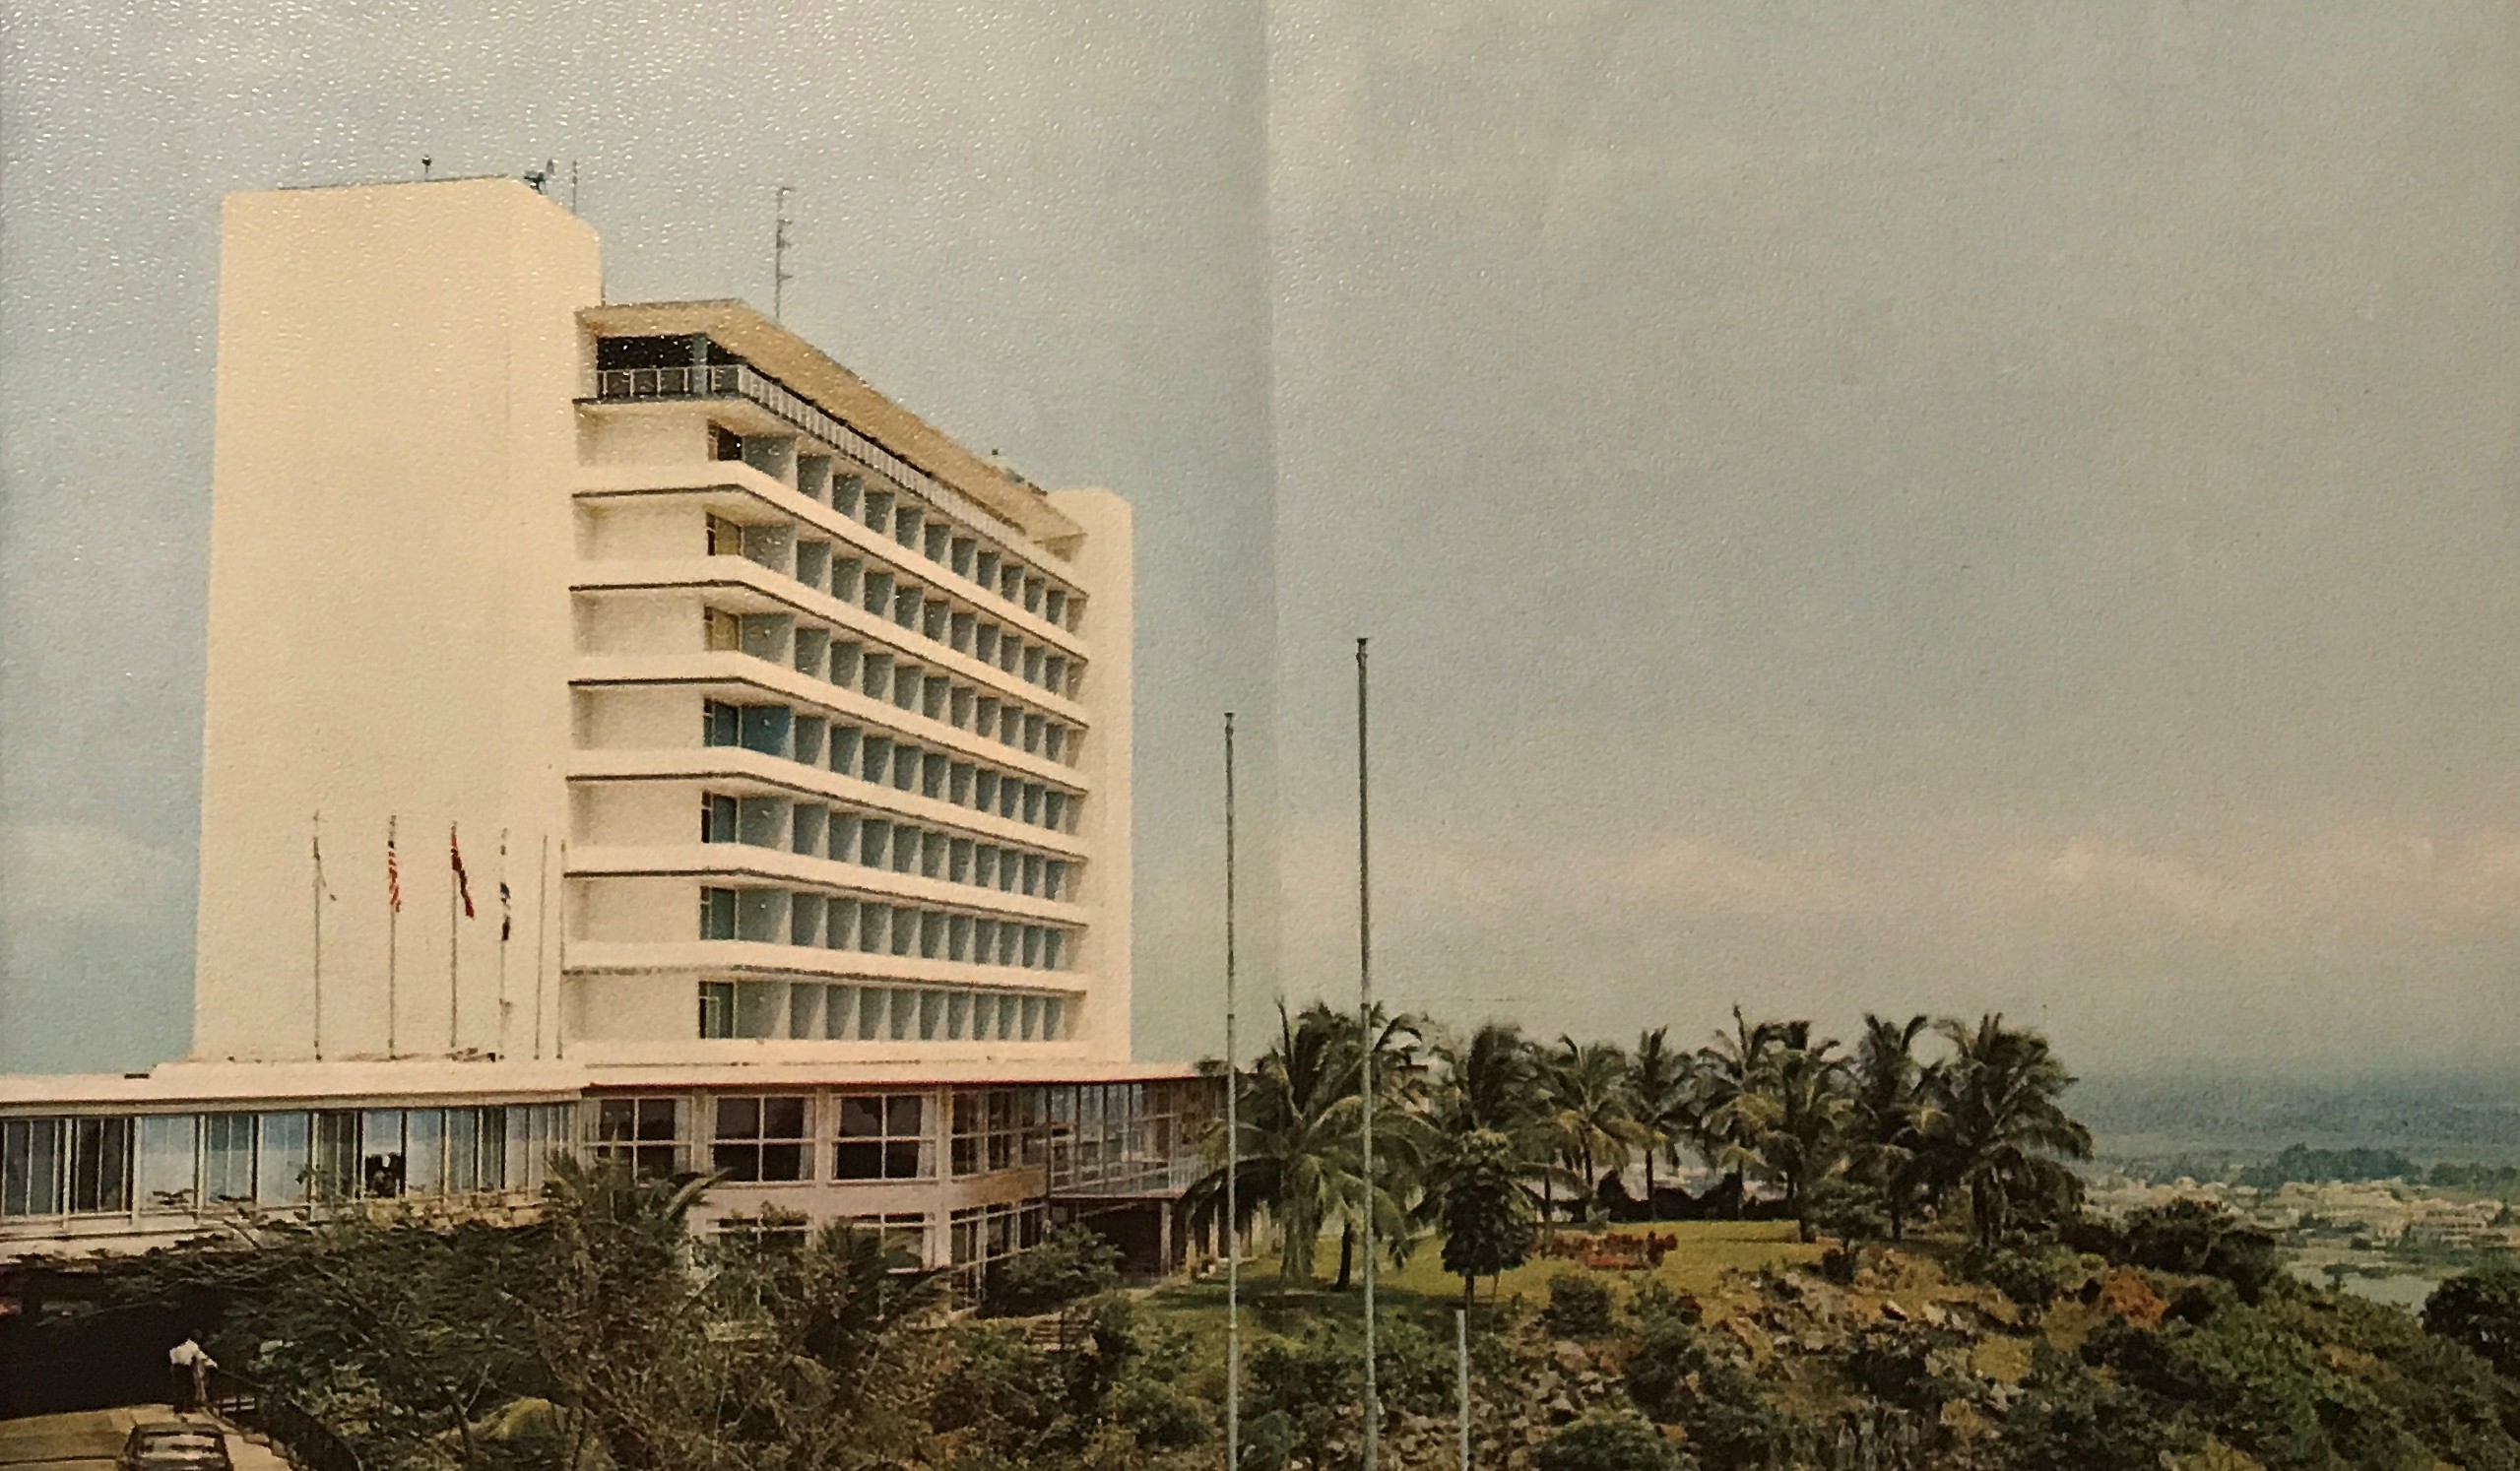 Neal Prince Ducor InterContinental Hotel Monrovia Liberia 